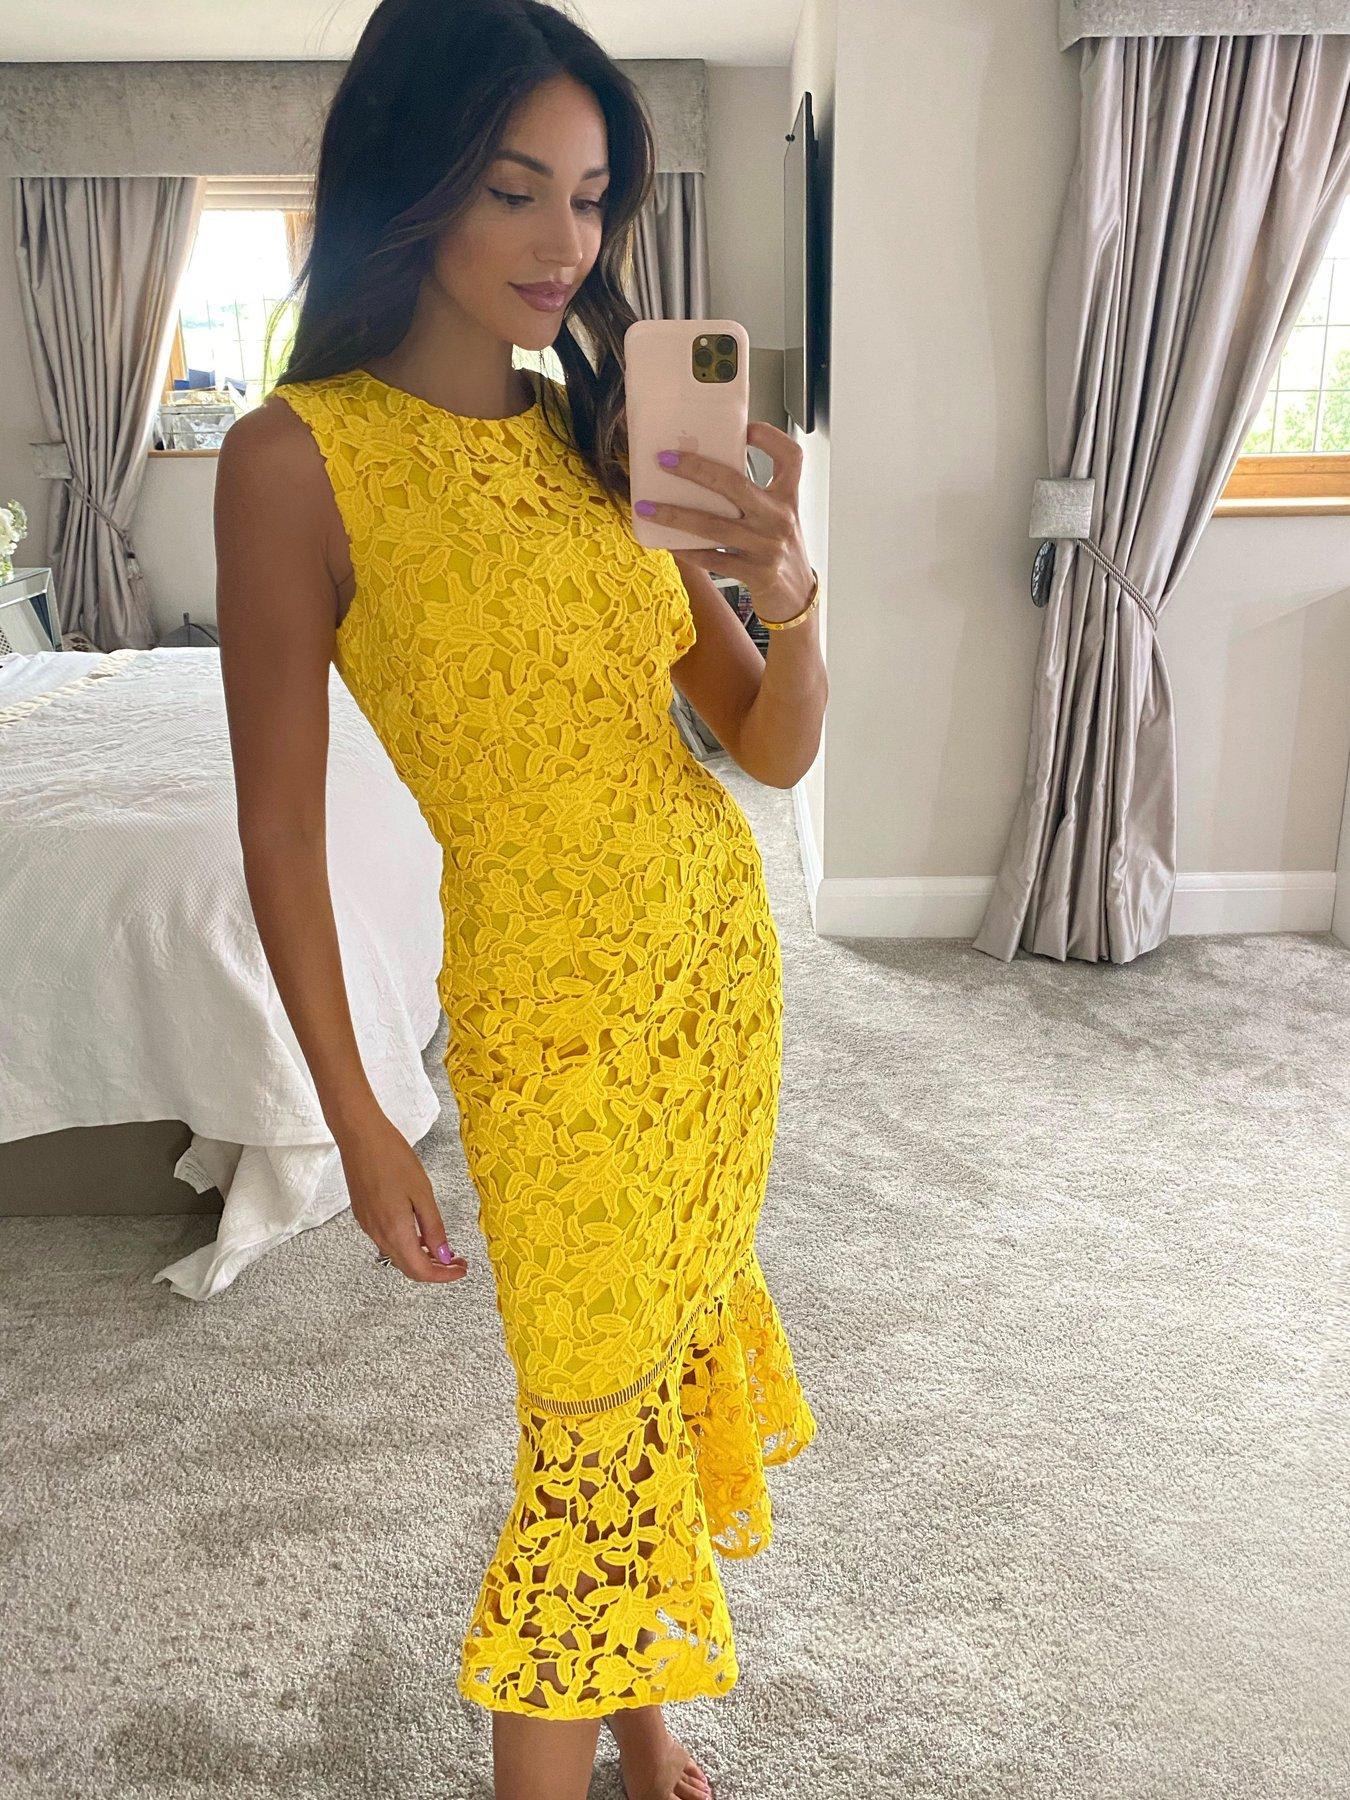 yellow summer dress uk